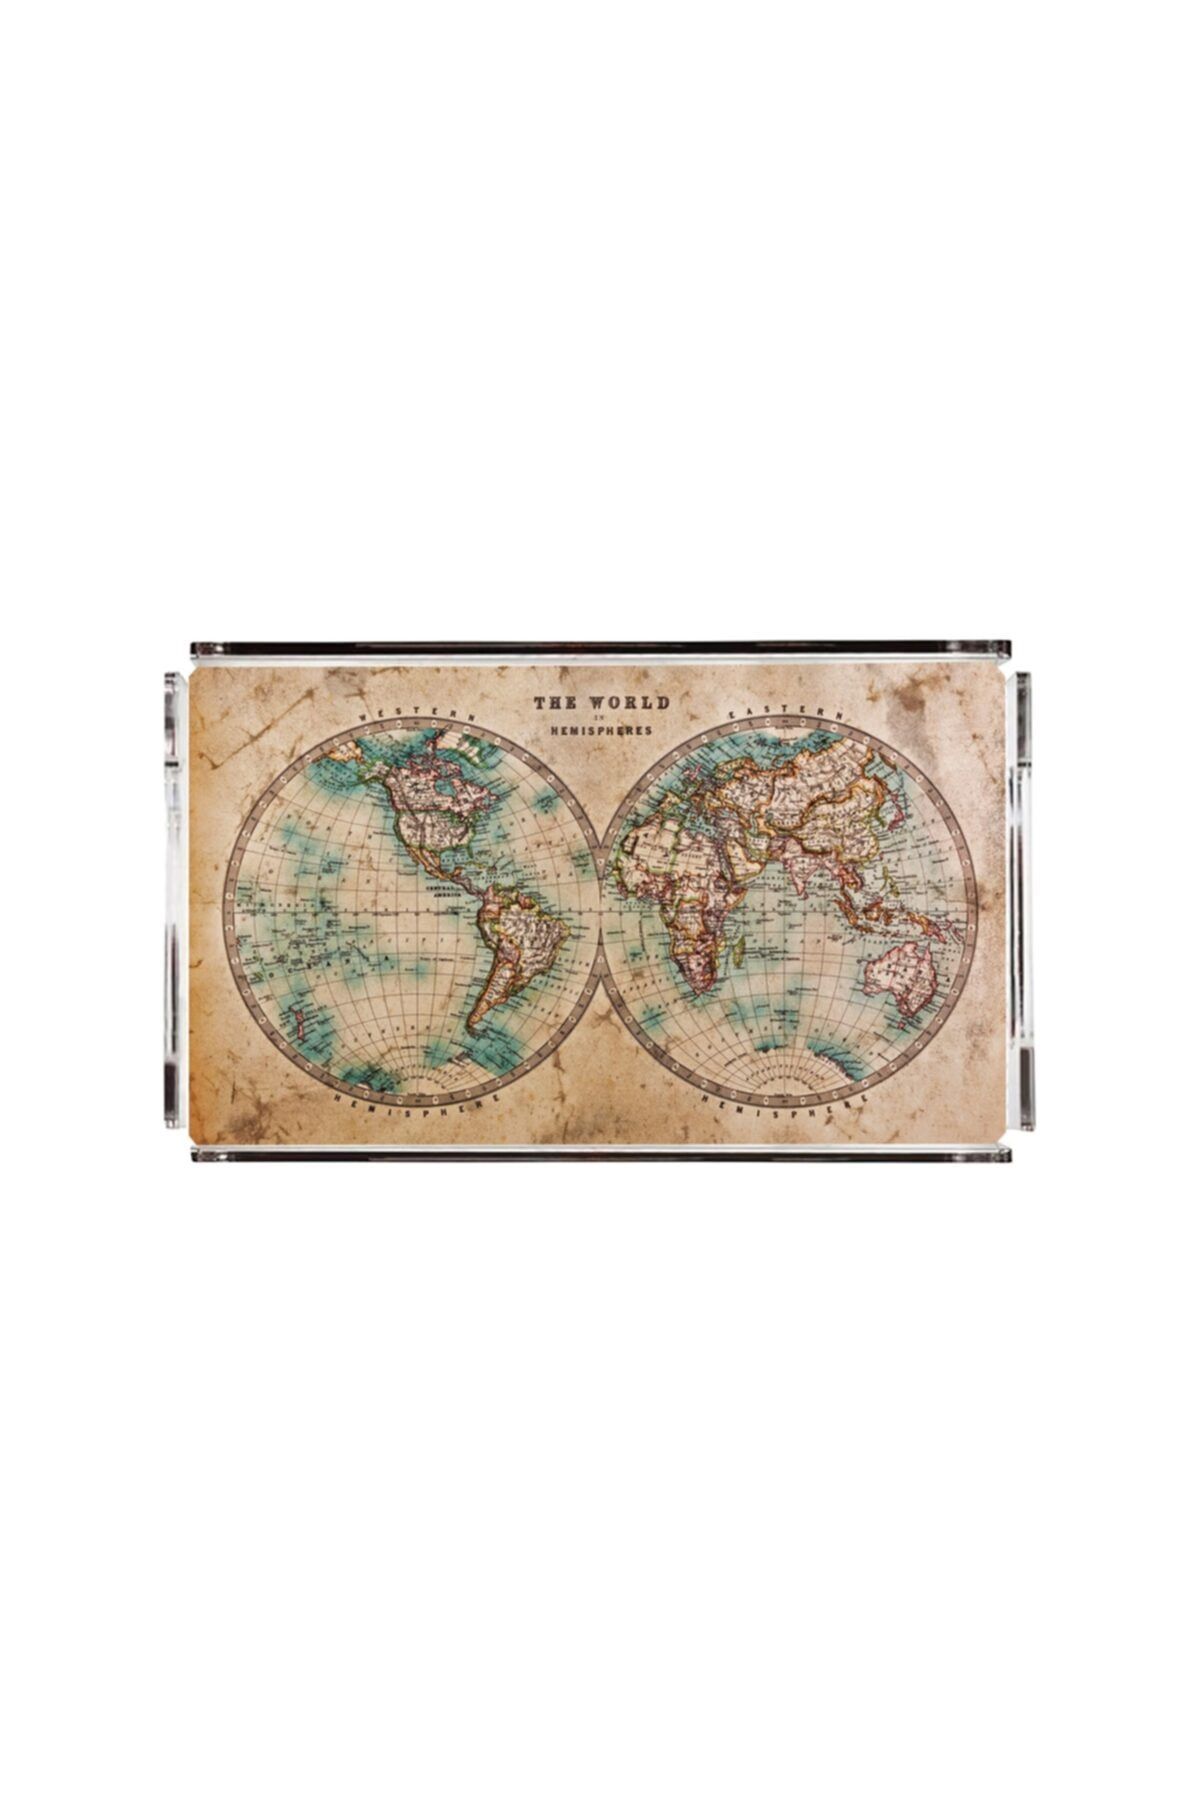 Adawall Vintage Dünya Haritası Pleksi Tepsi - Pt2118 - 40x24cm